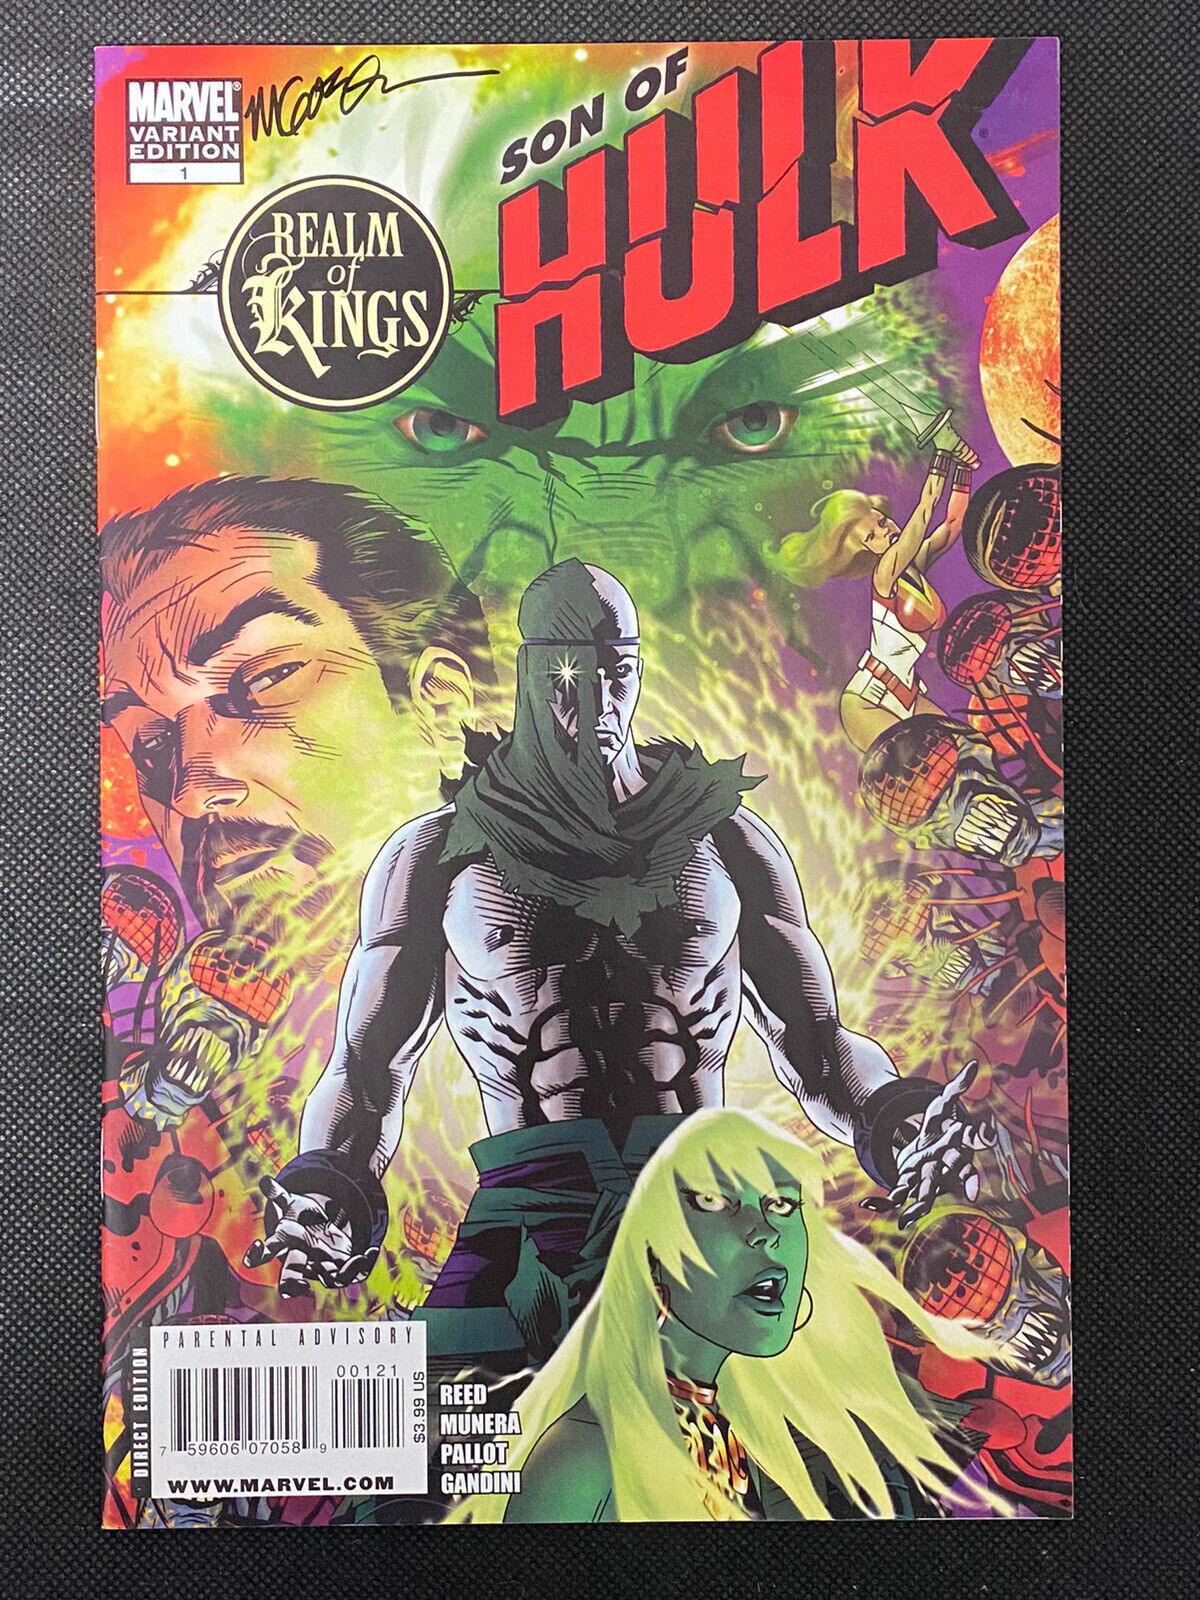 Realm of Kings, Son of Hulk #1 (Marvel 2010) 1st Jentorra 1:20 Ratio - SIGNED